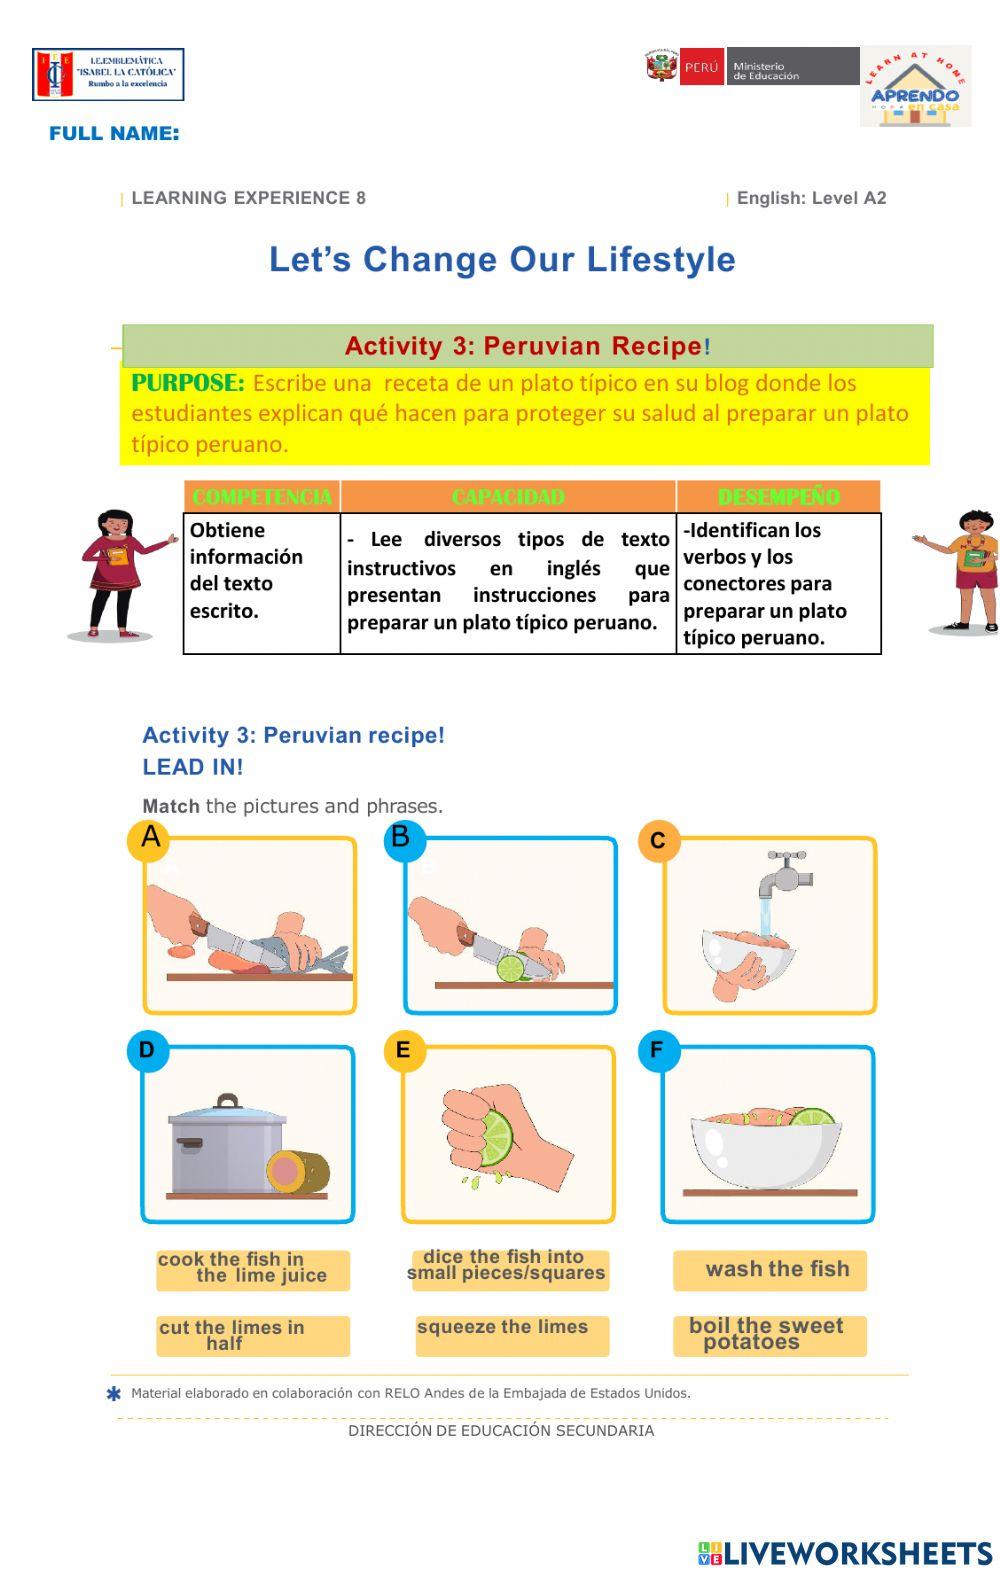 A peruvian Recipe- Activity 3